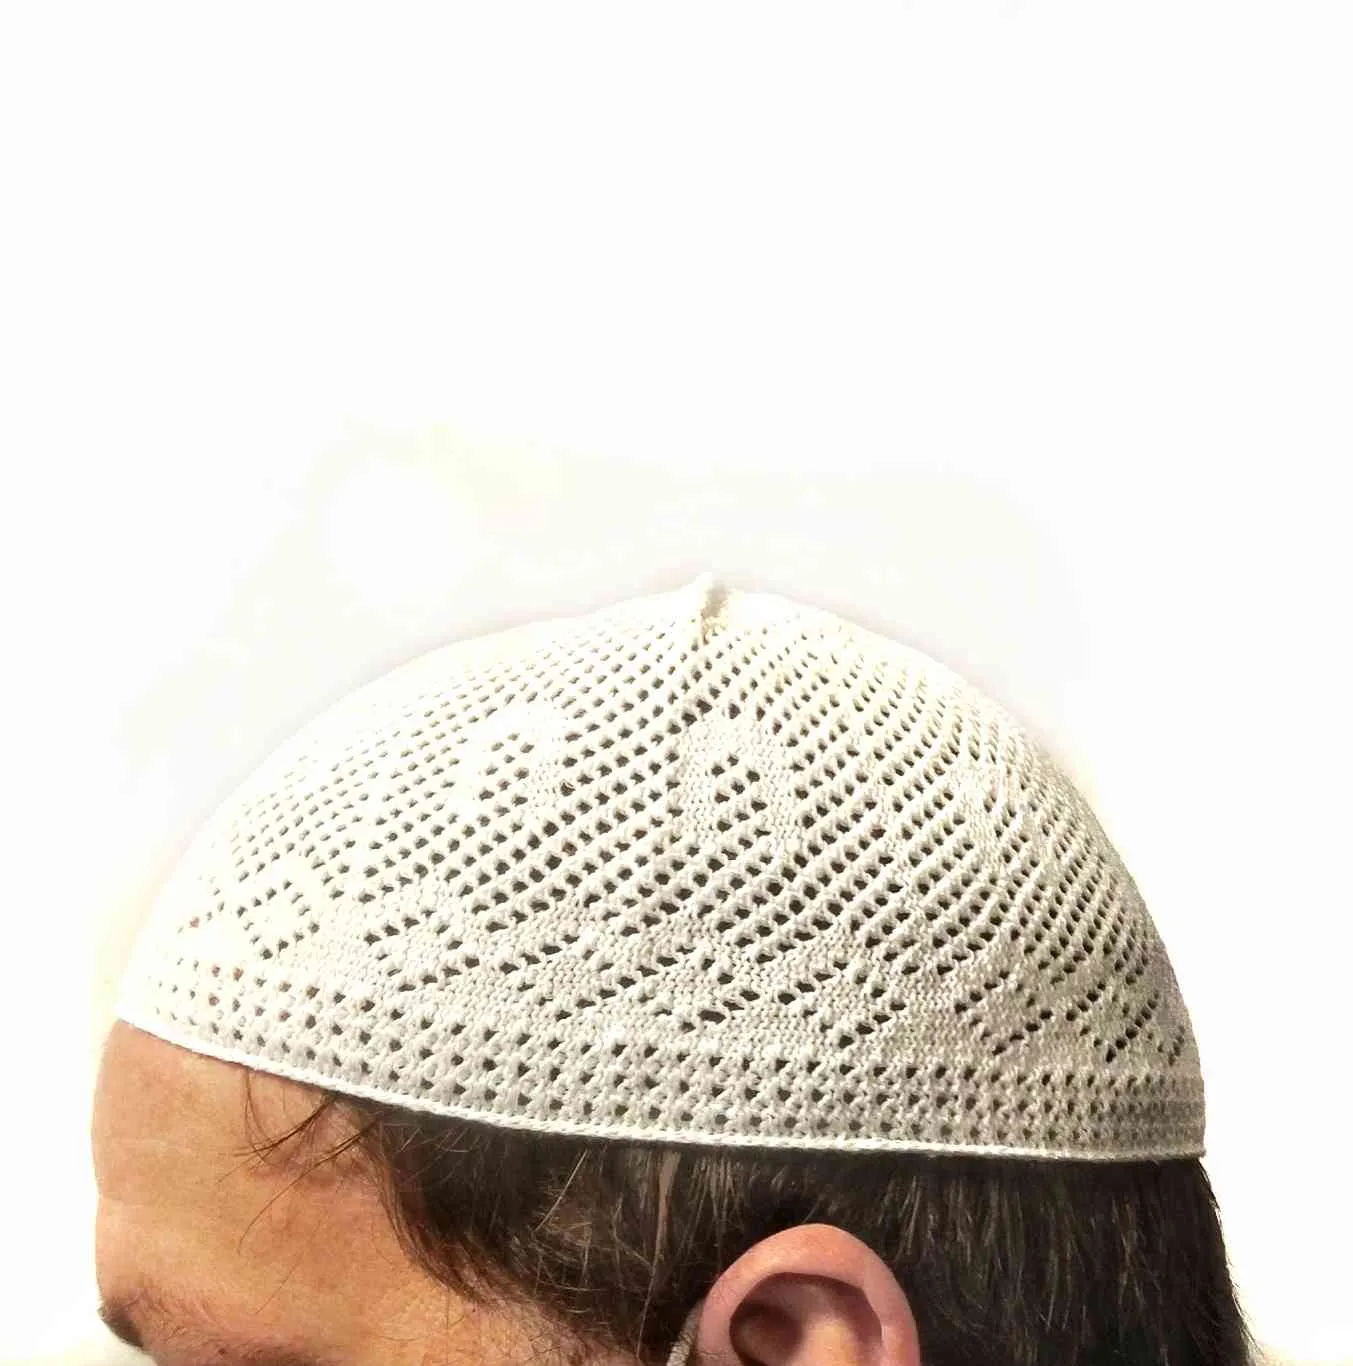 MEN WHOLL COIF COTTONT NINTINGHATS MEN039S SKULL CAP MUSLIM ISLAMIC PRAYANE HAT HEAD SOLID CASUAL7991570